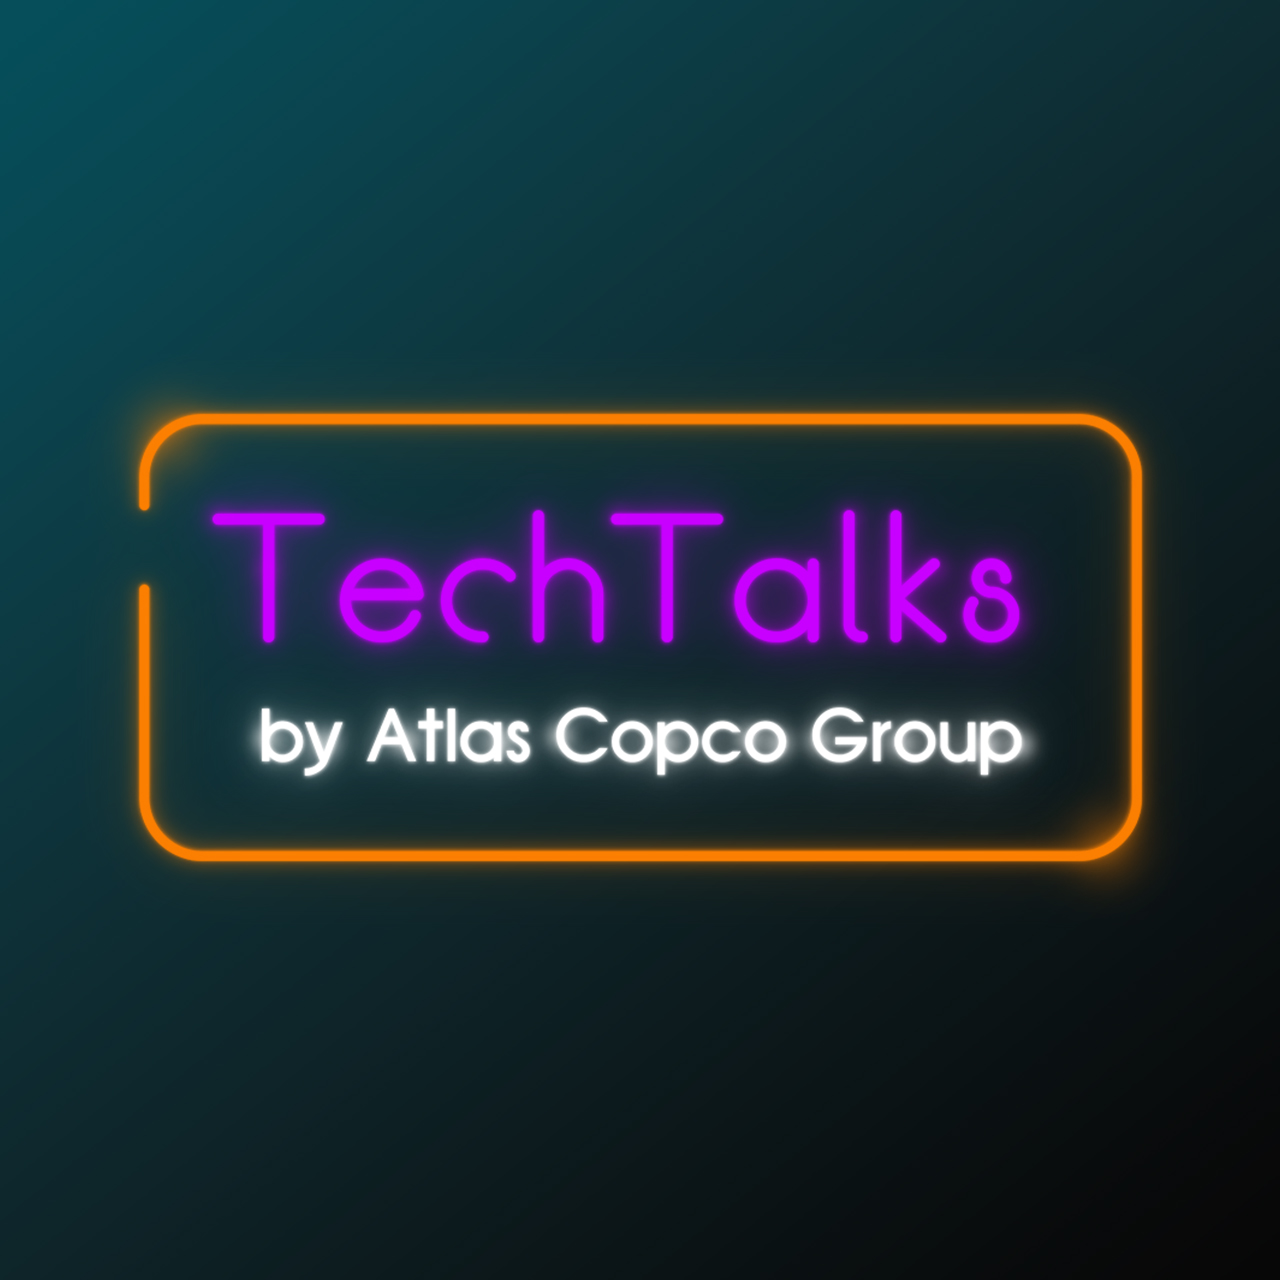 Tech Talks by Atlas Copco Group